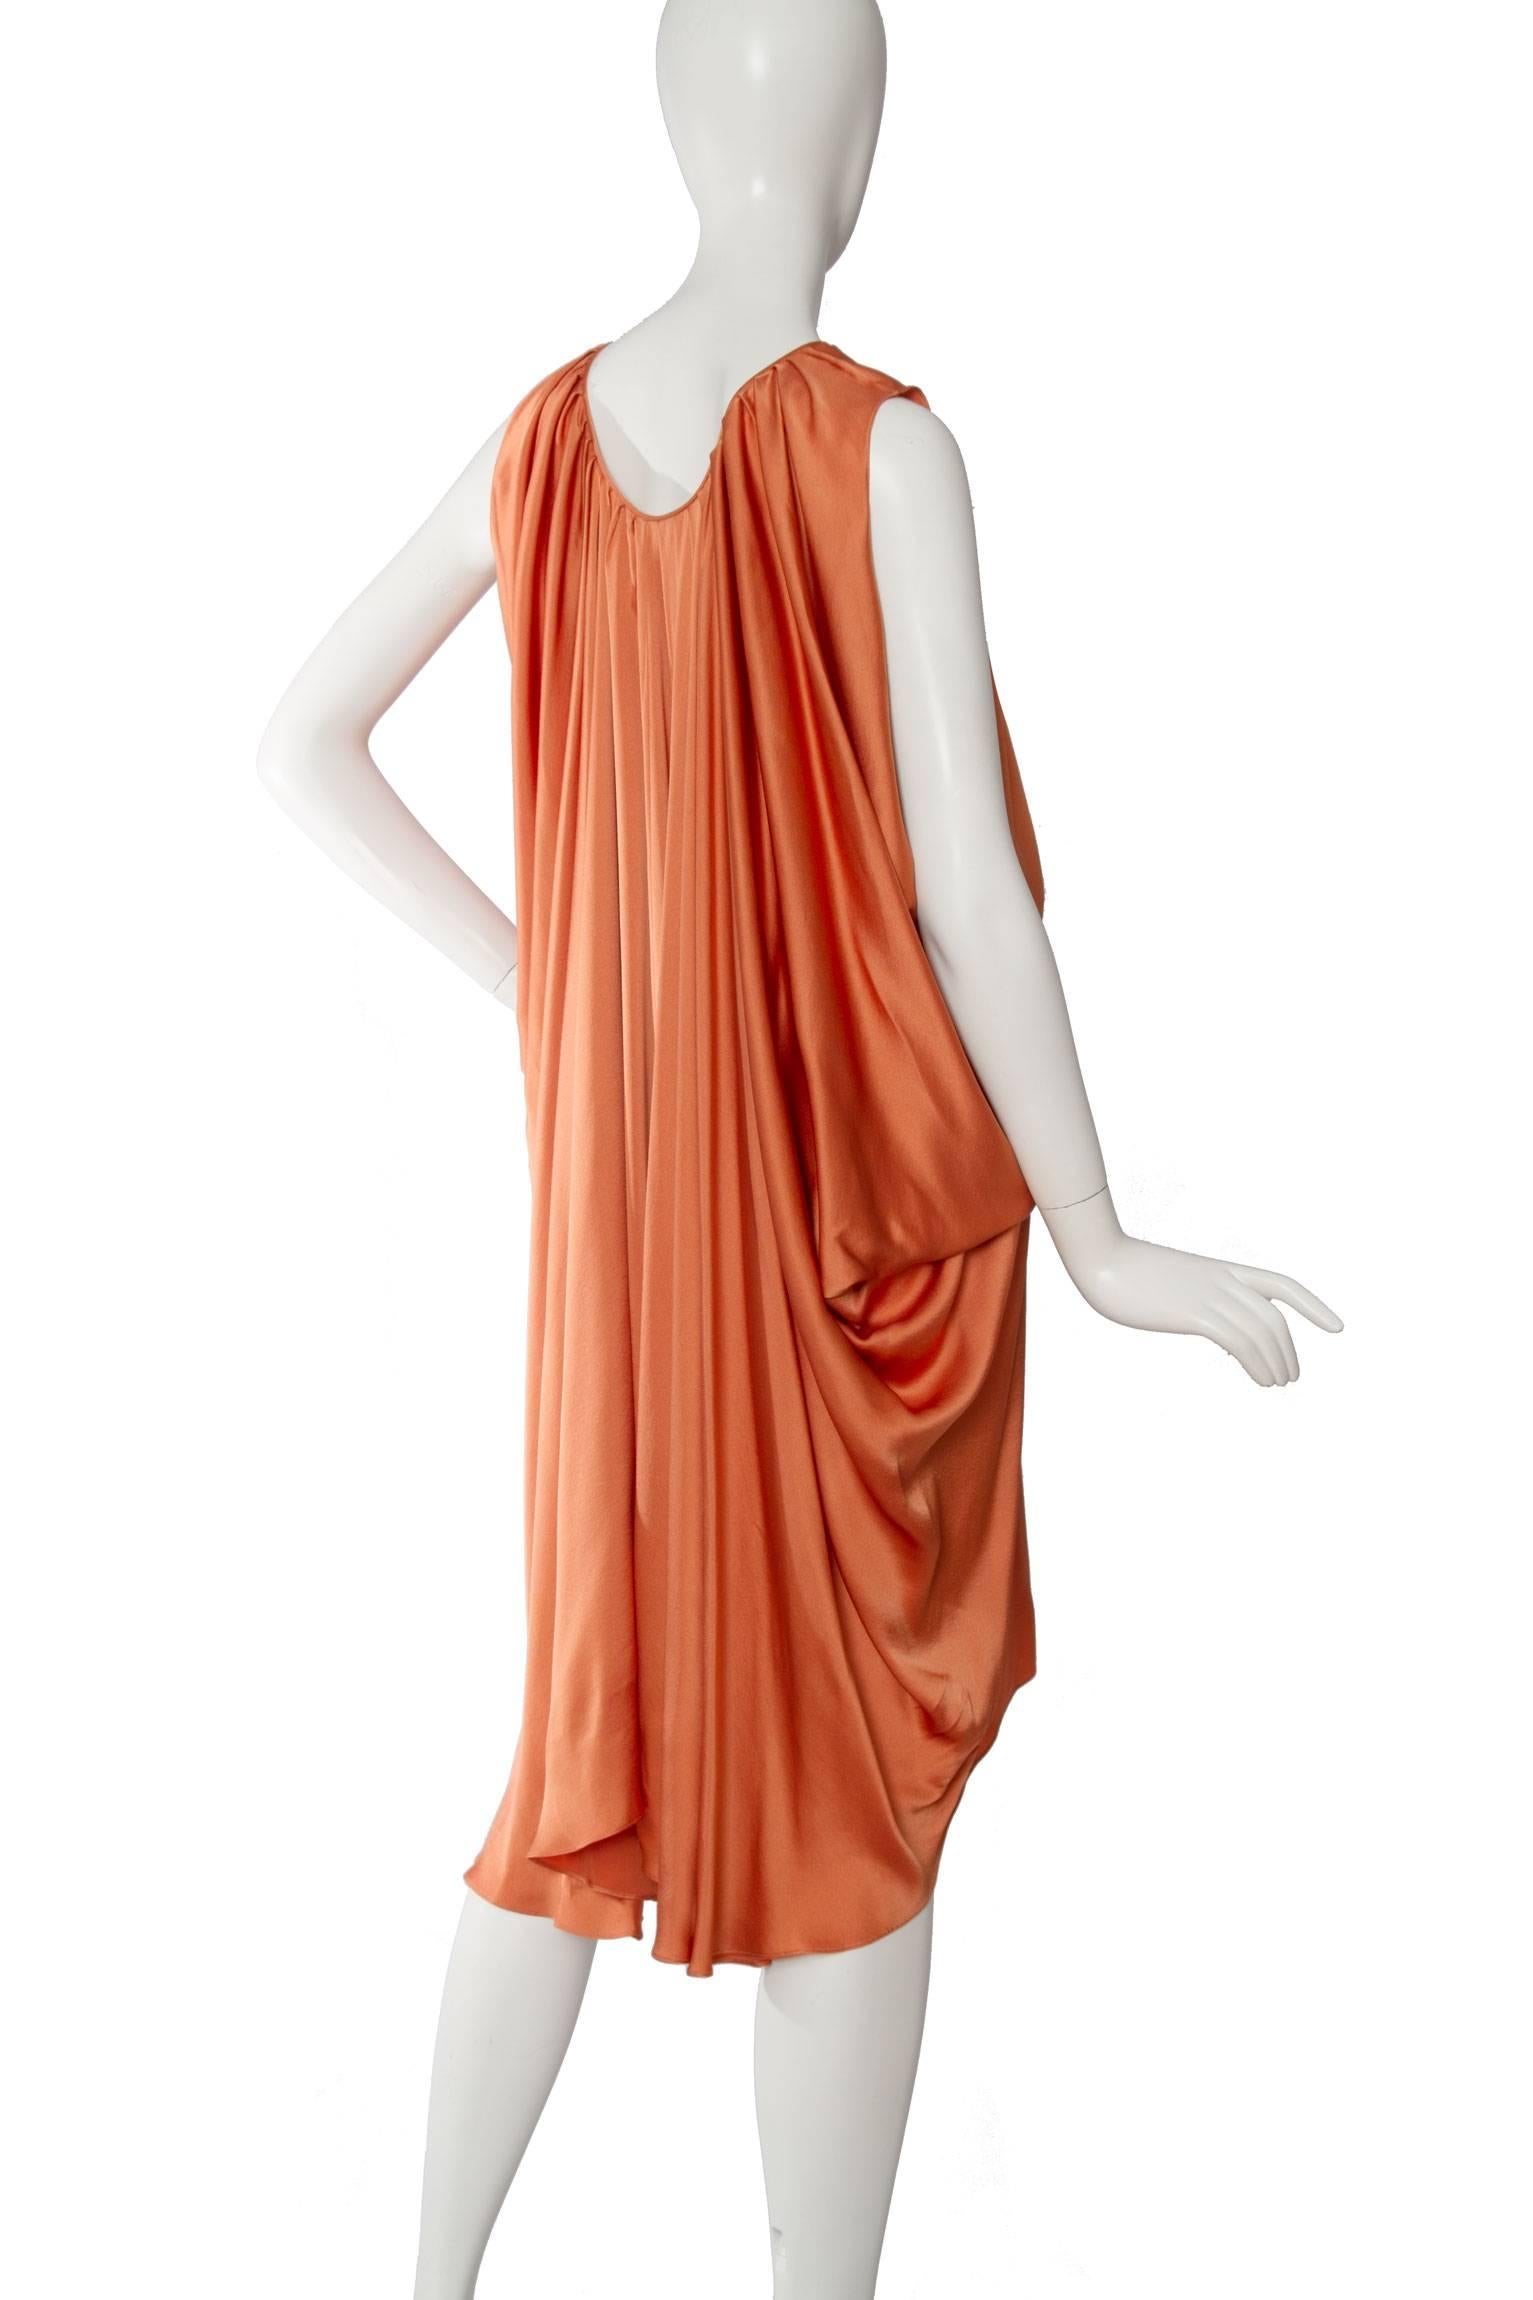 saint laurent orange dress